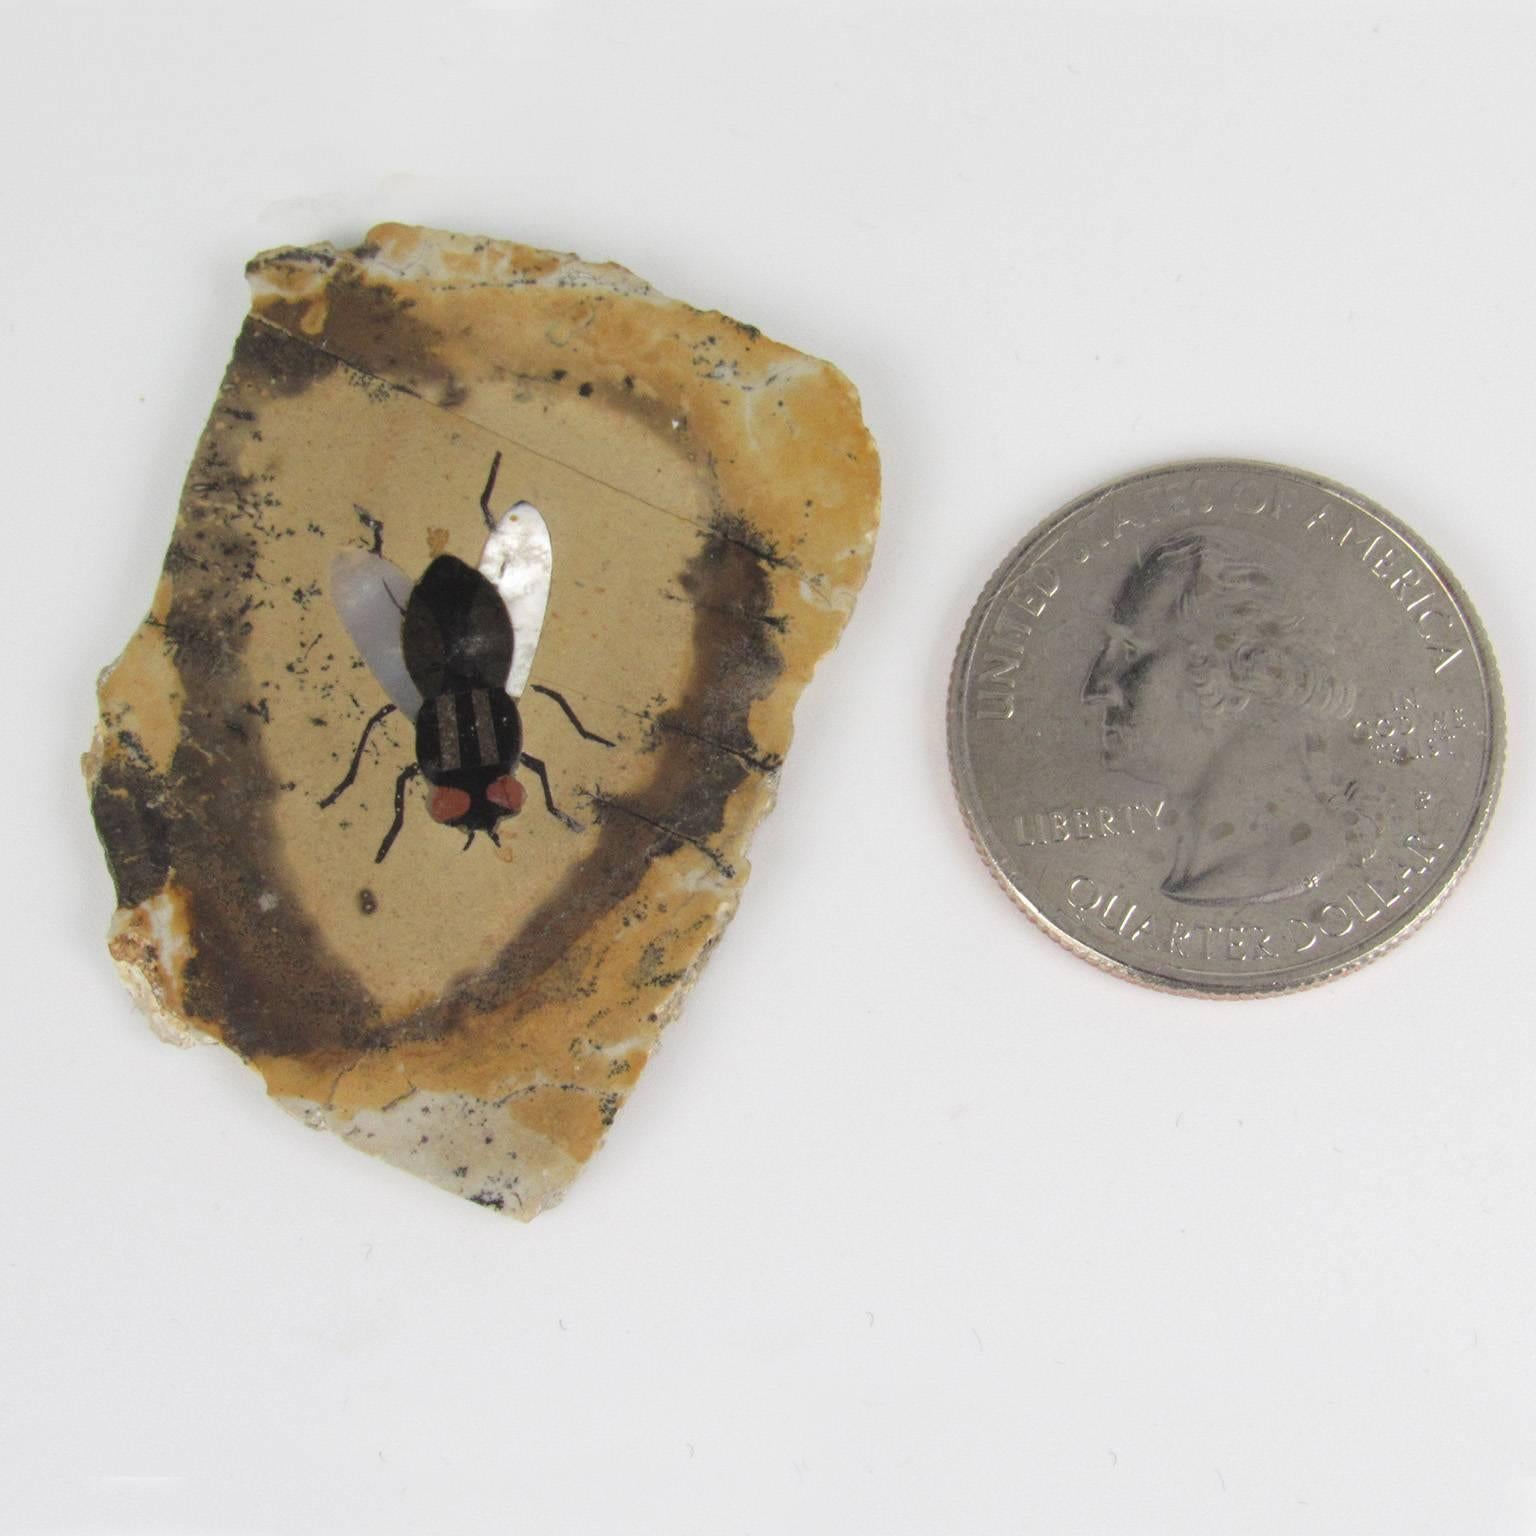 Miniature Italian Pietra Dura fly plaque. Measure: 1 5/8 x 1 1/4 inches.